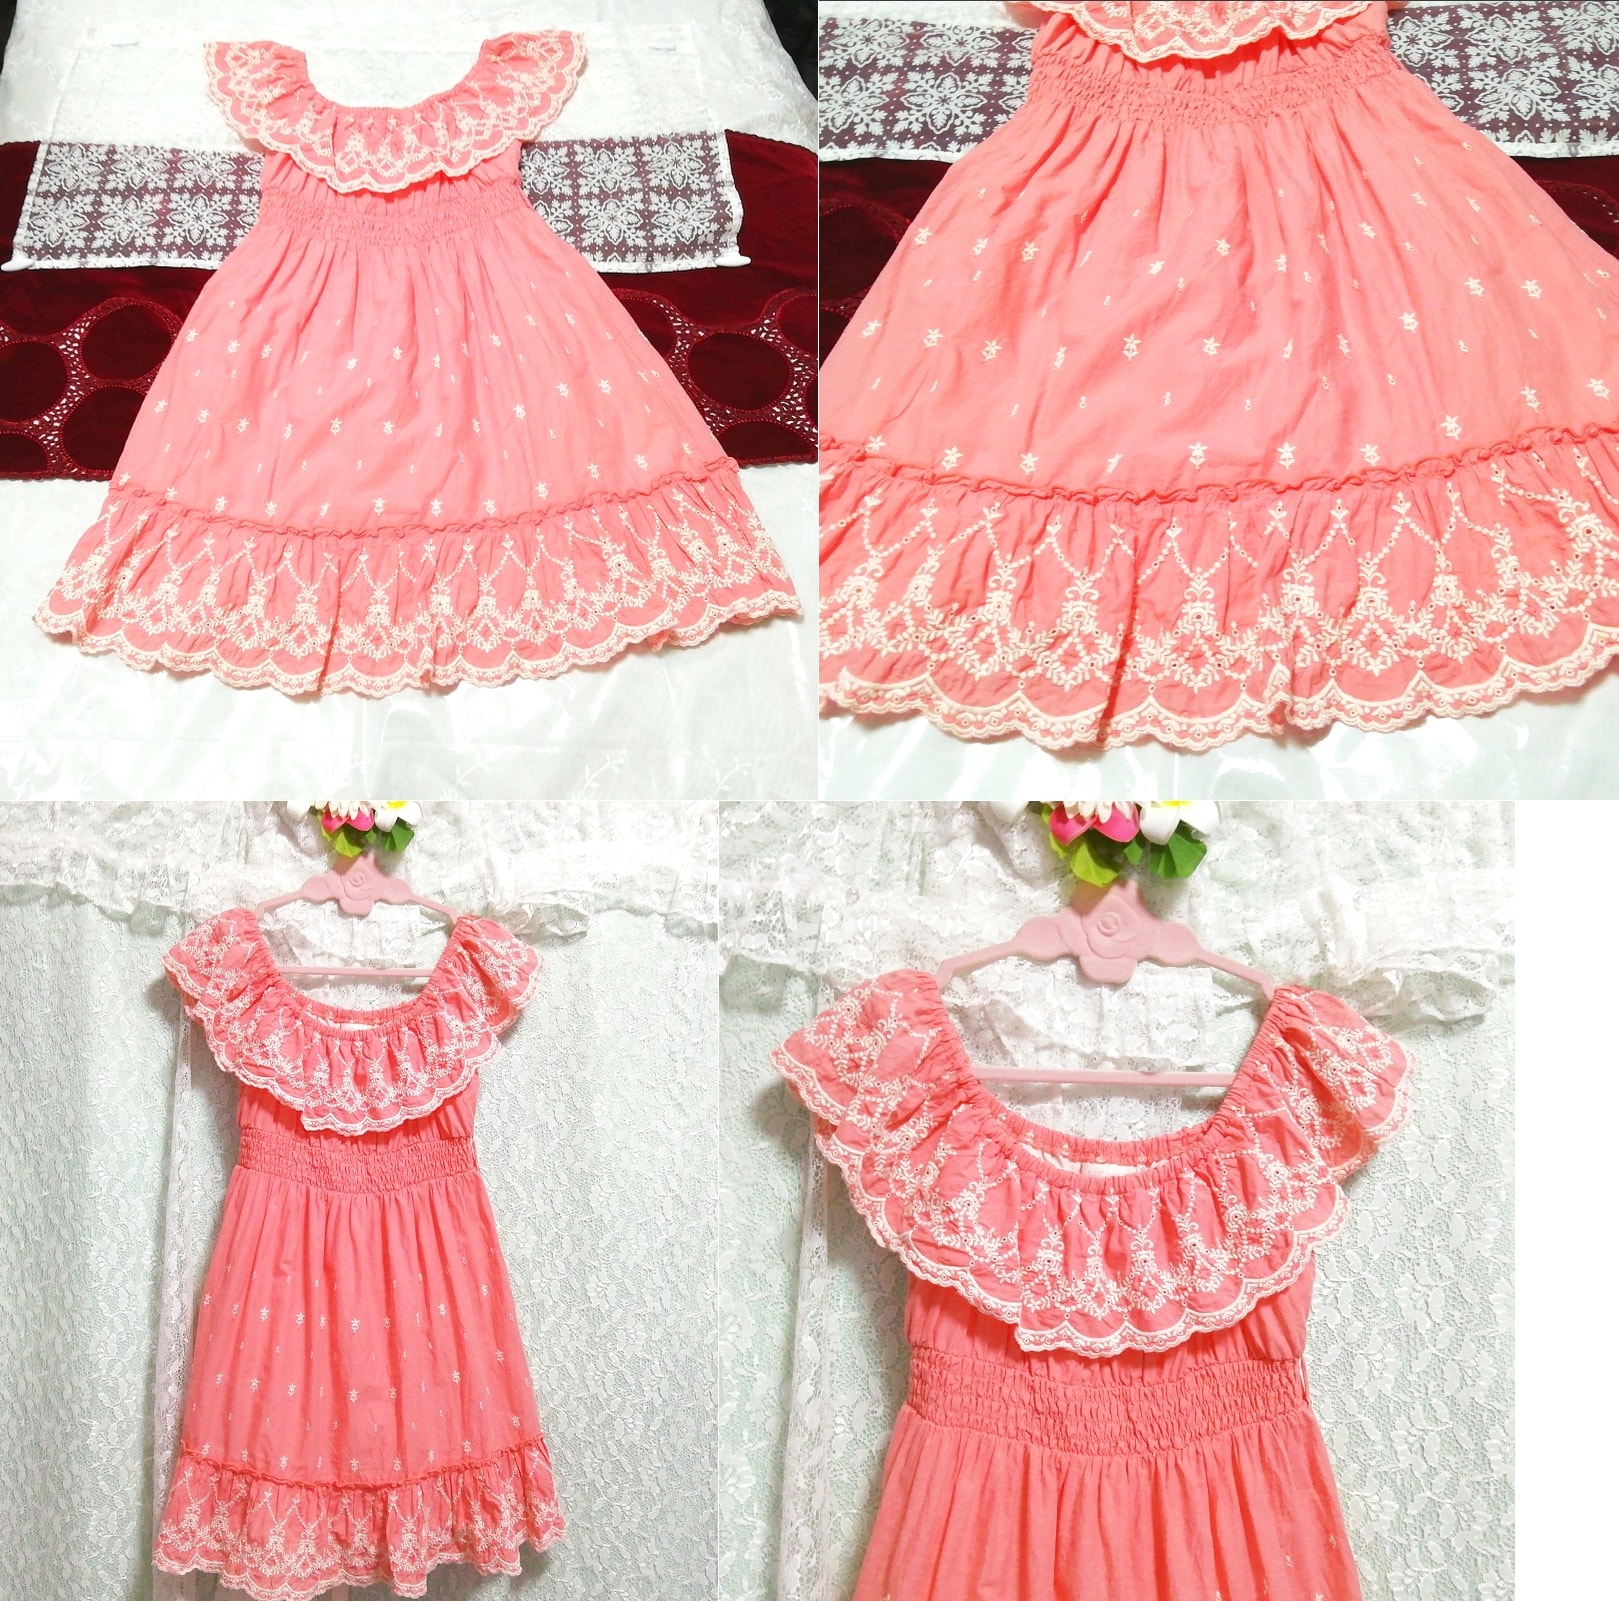 Pink cotton negligee nightgown sleeveless dress, knee length skirt, m size